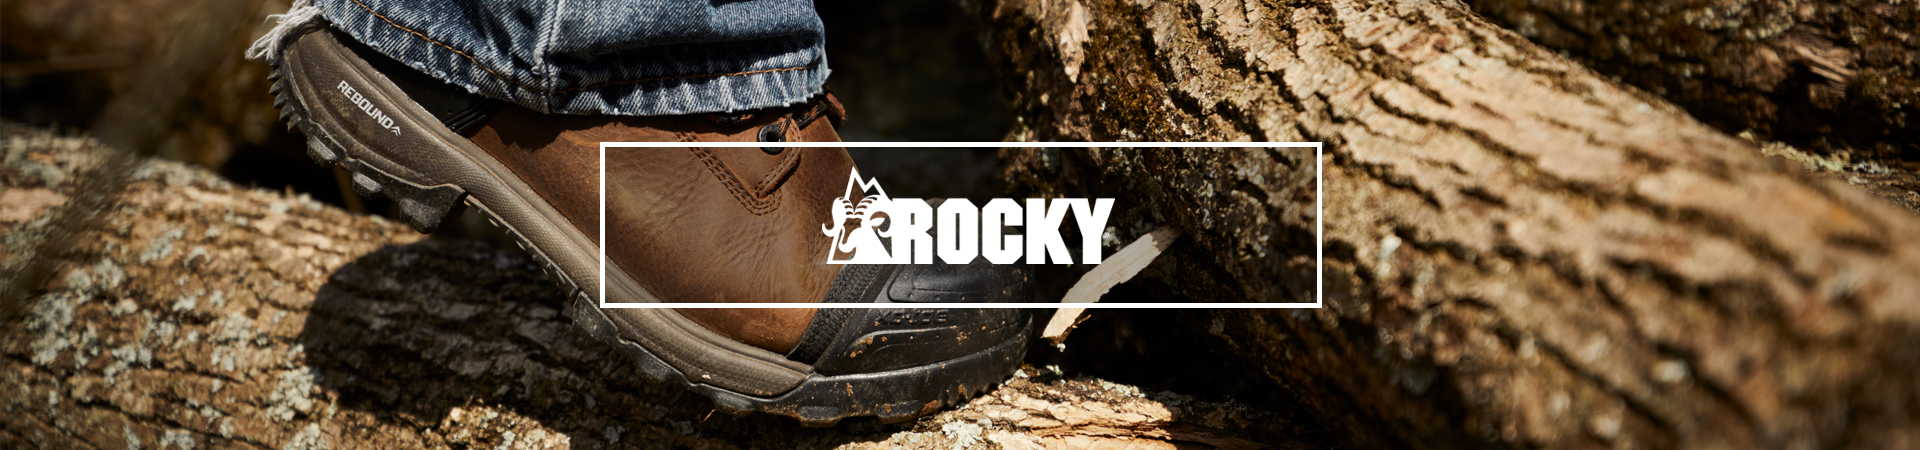 rocky mud boots